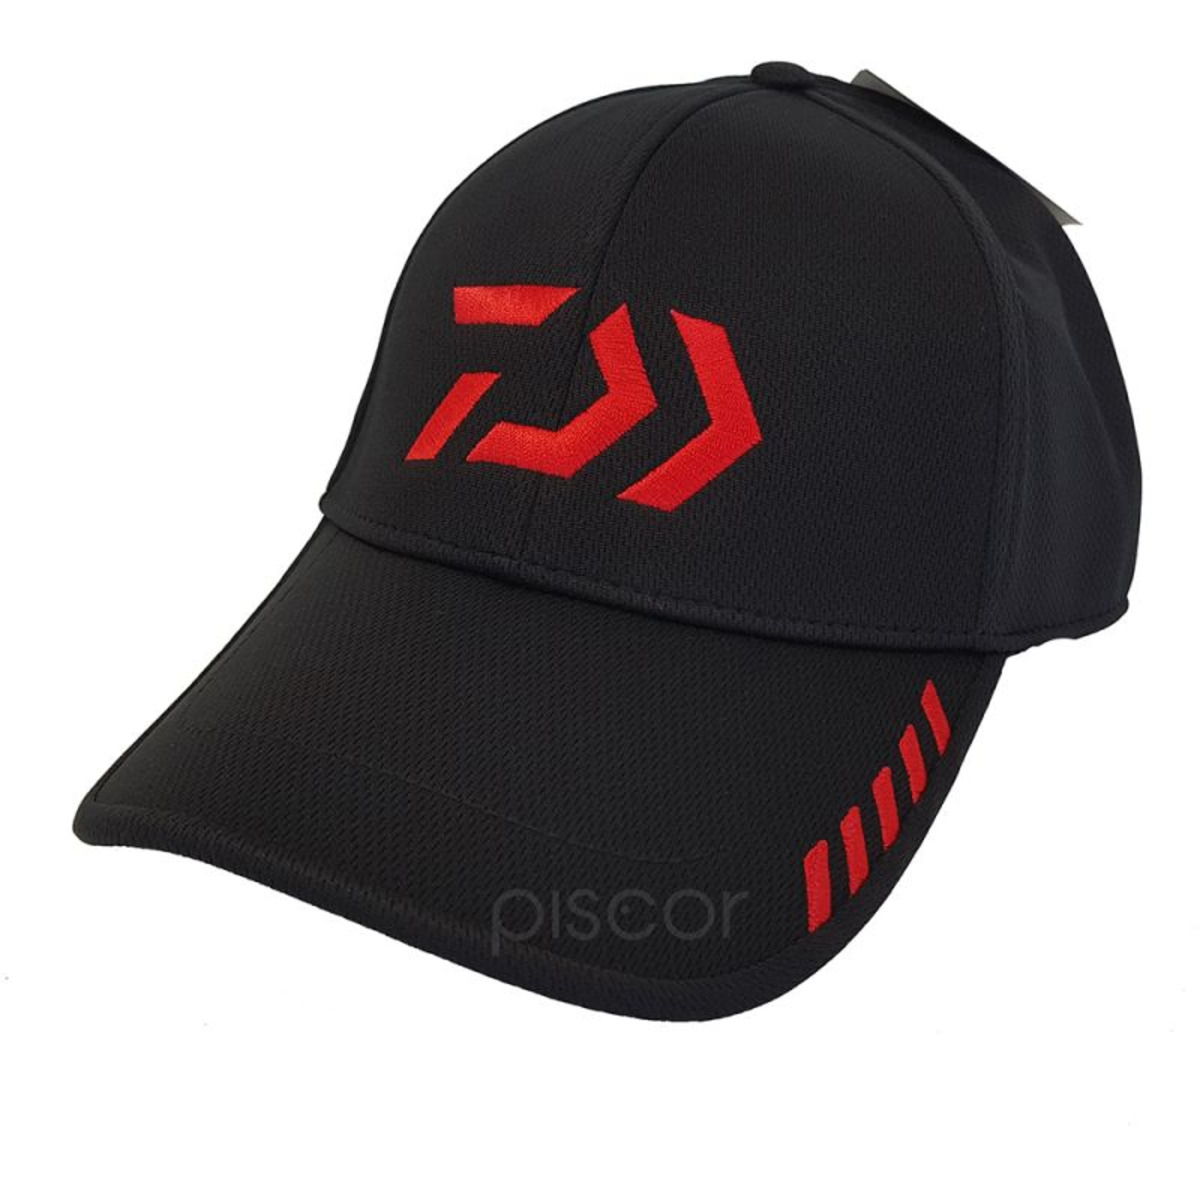 Daiwa Black - Red Free Cap with Visor - 